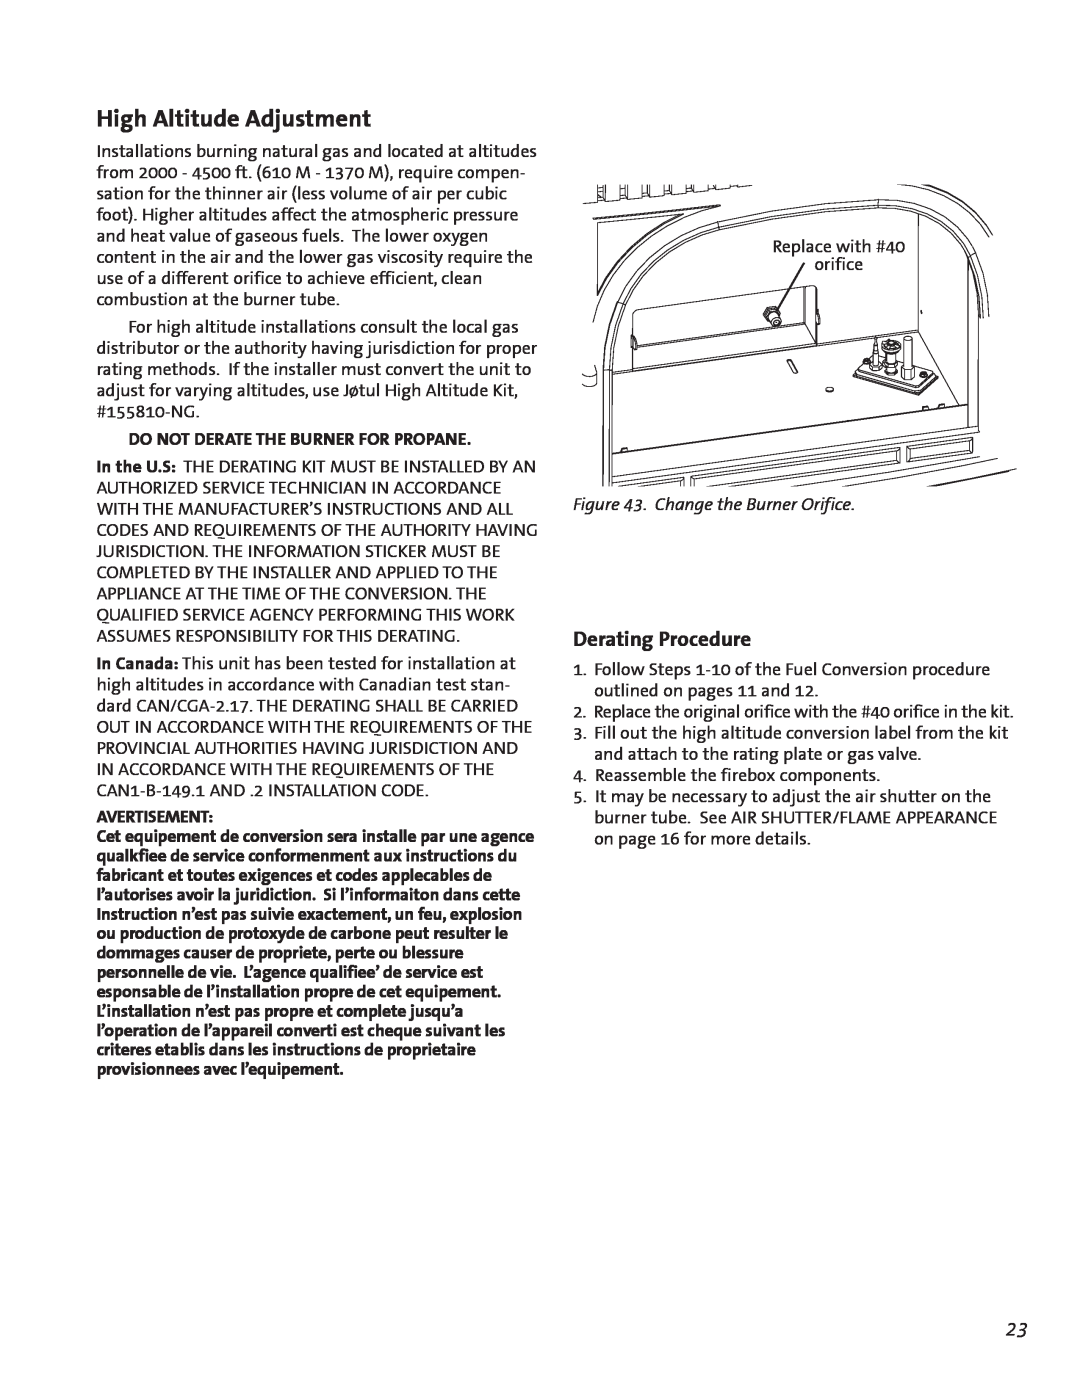 Jotul GF300 BV manual High Altitude Adjustment, Derating Procedure, Change the Burner Orifice 